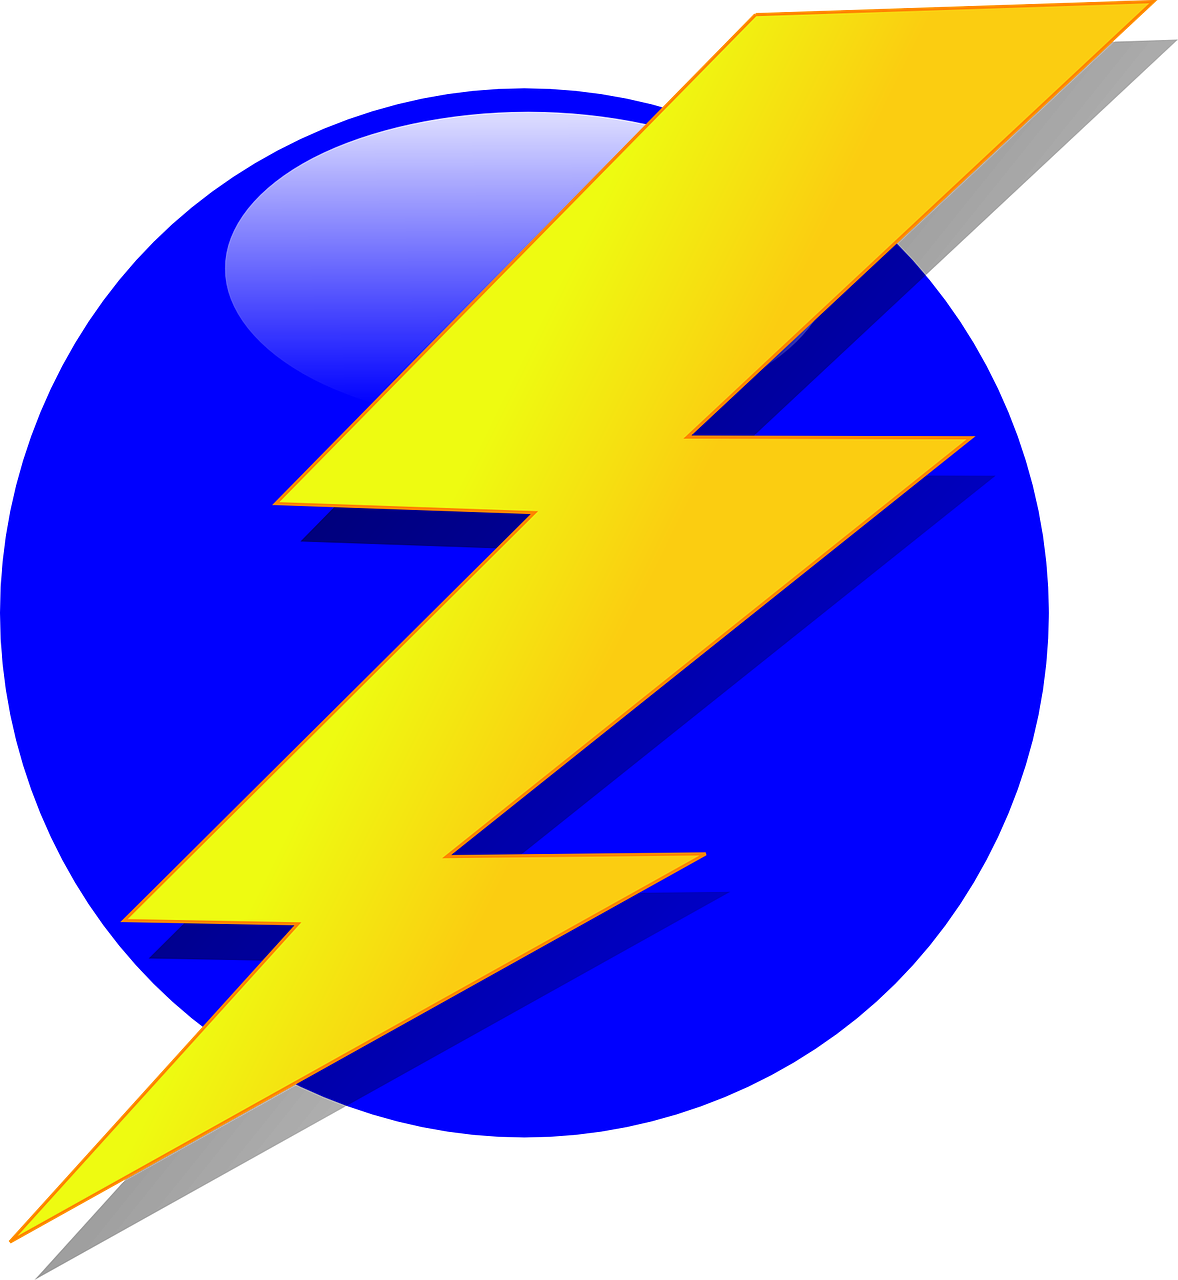 Bolt Lightning Electricity Flash Yellow Free Image From Needpix Com